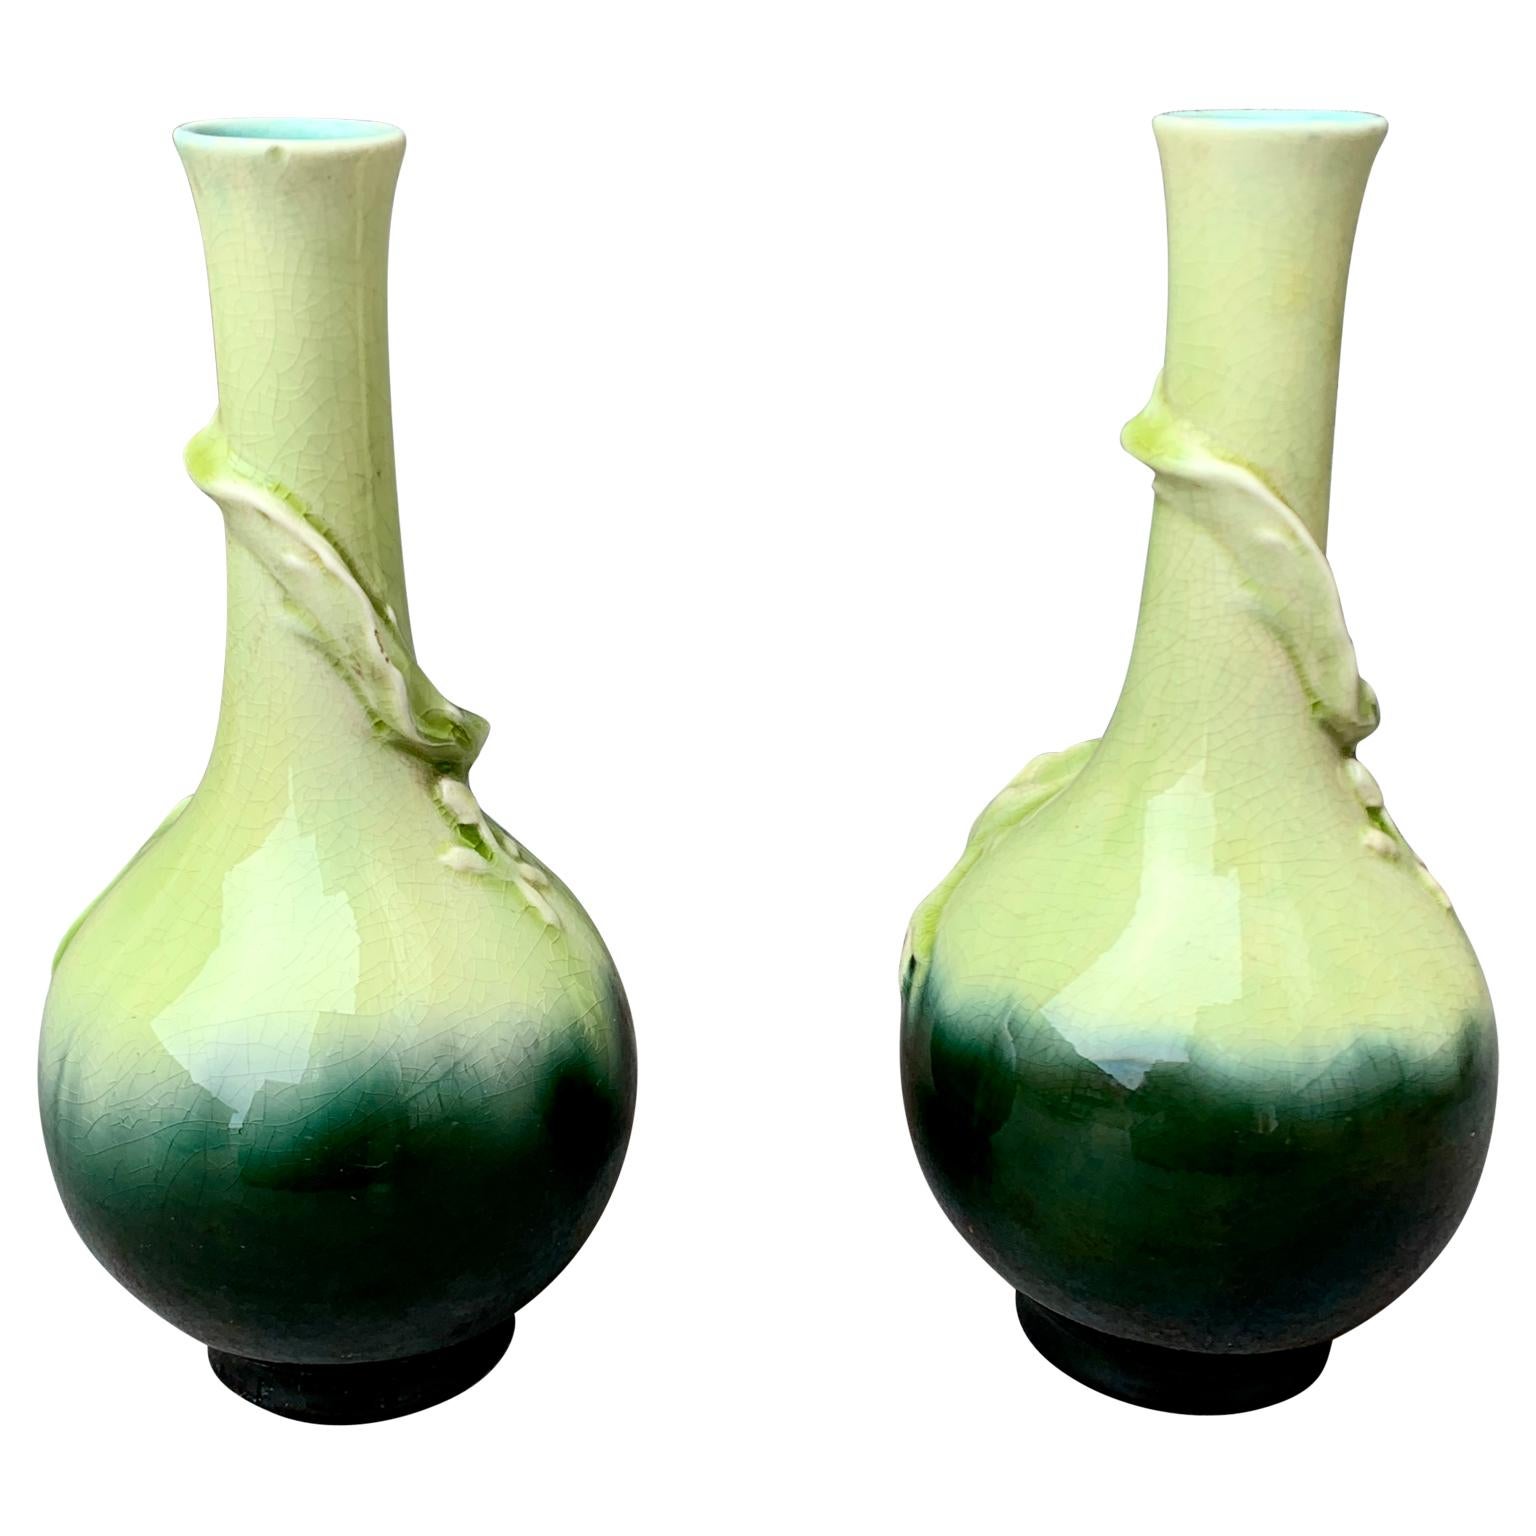  19th Century Pair of Swedish Art Nouveau Majolica Vases  For Sale 1